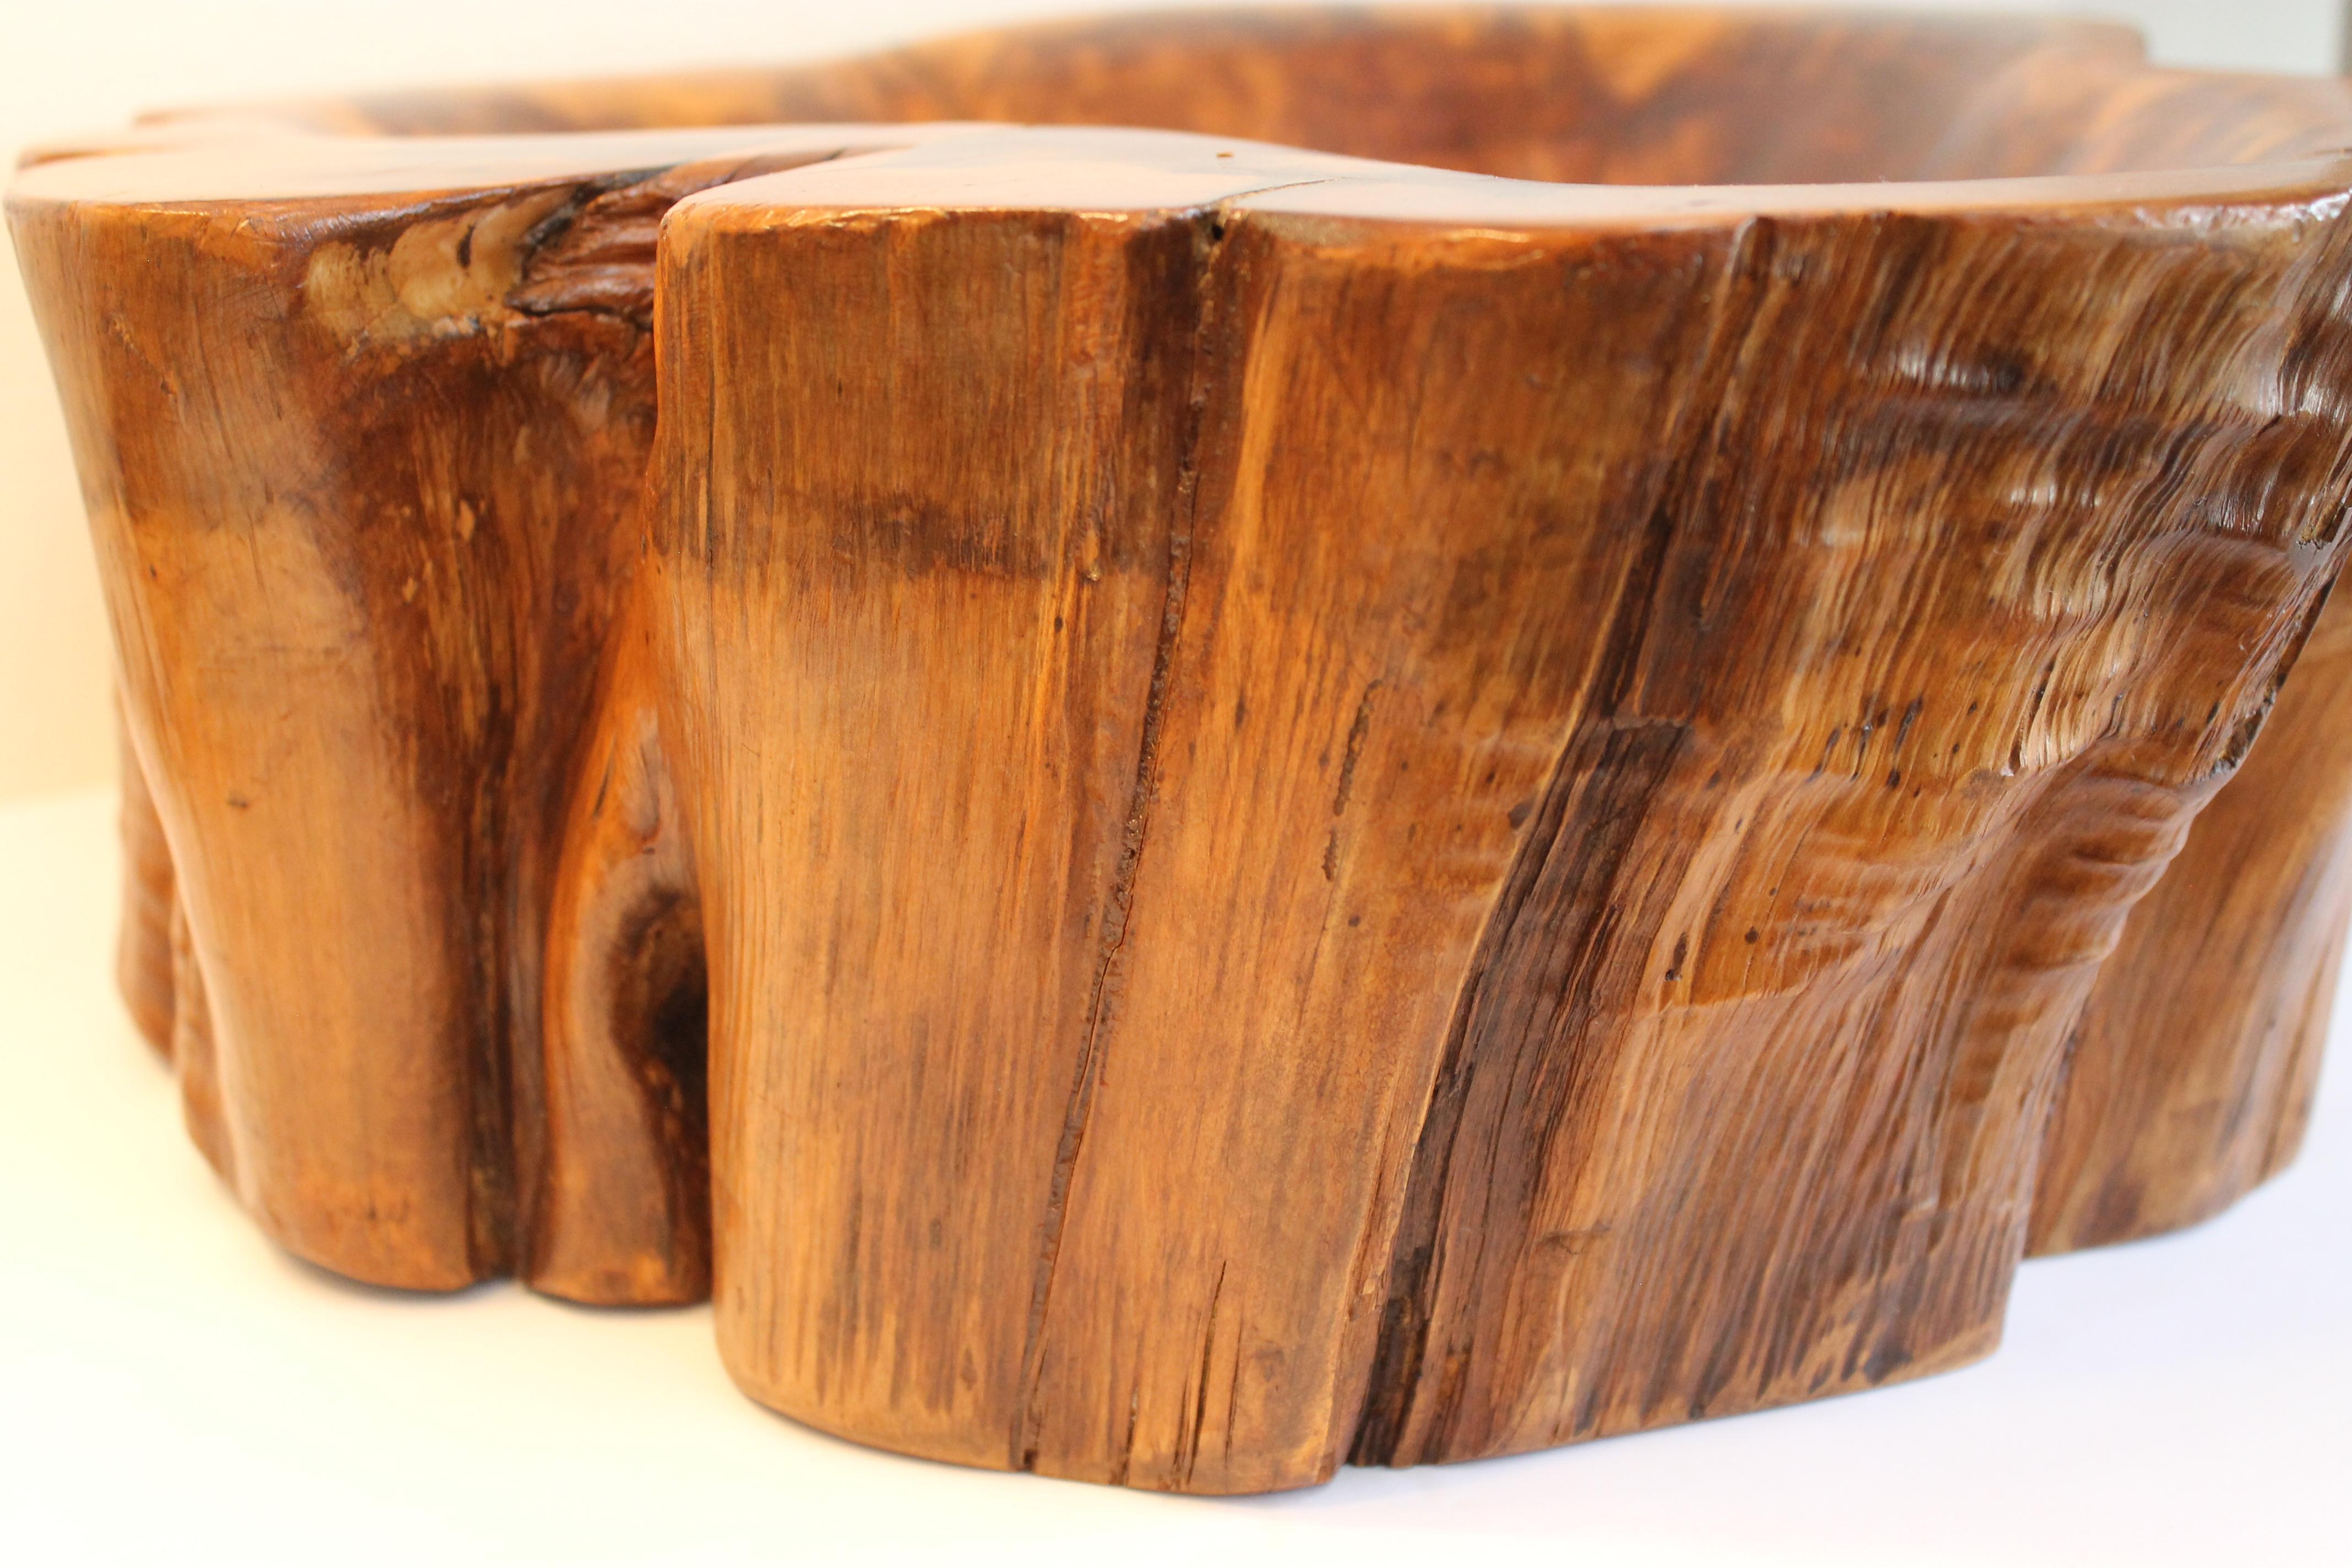 burl wood bowls